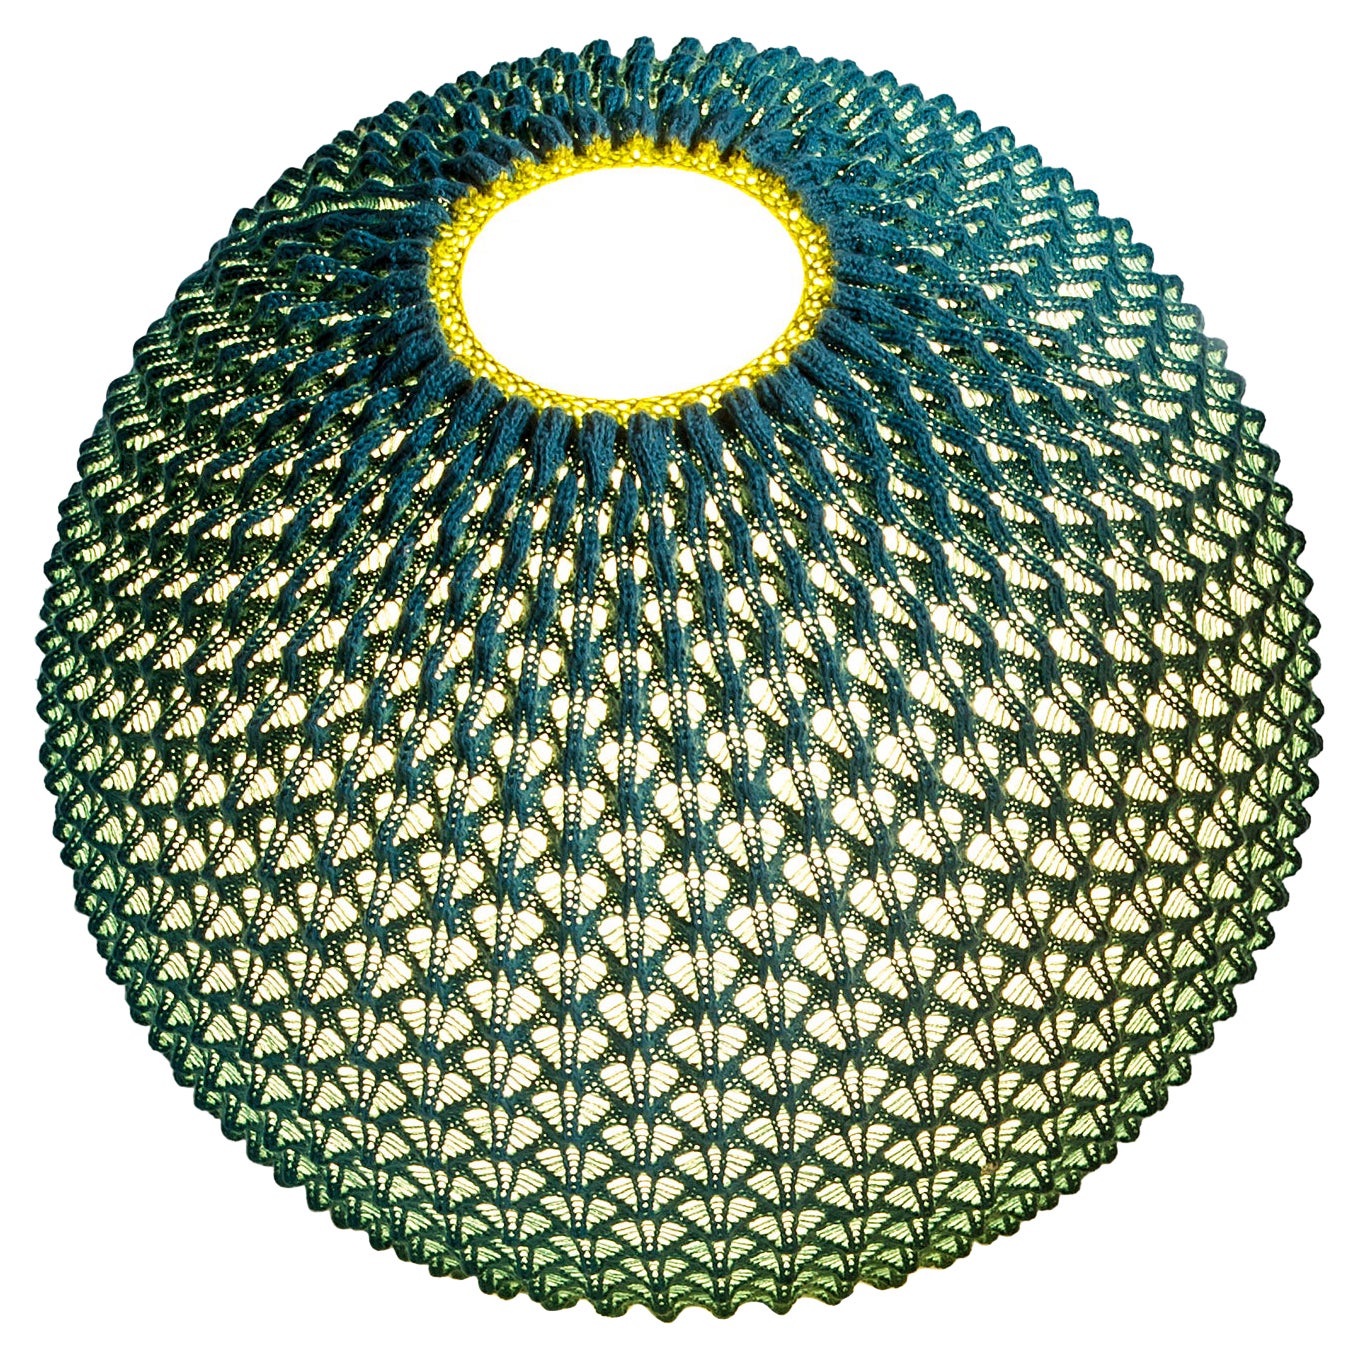 Knitted Floor lamp  -  Small size 30cm diameter